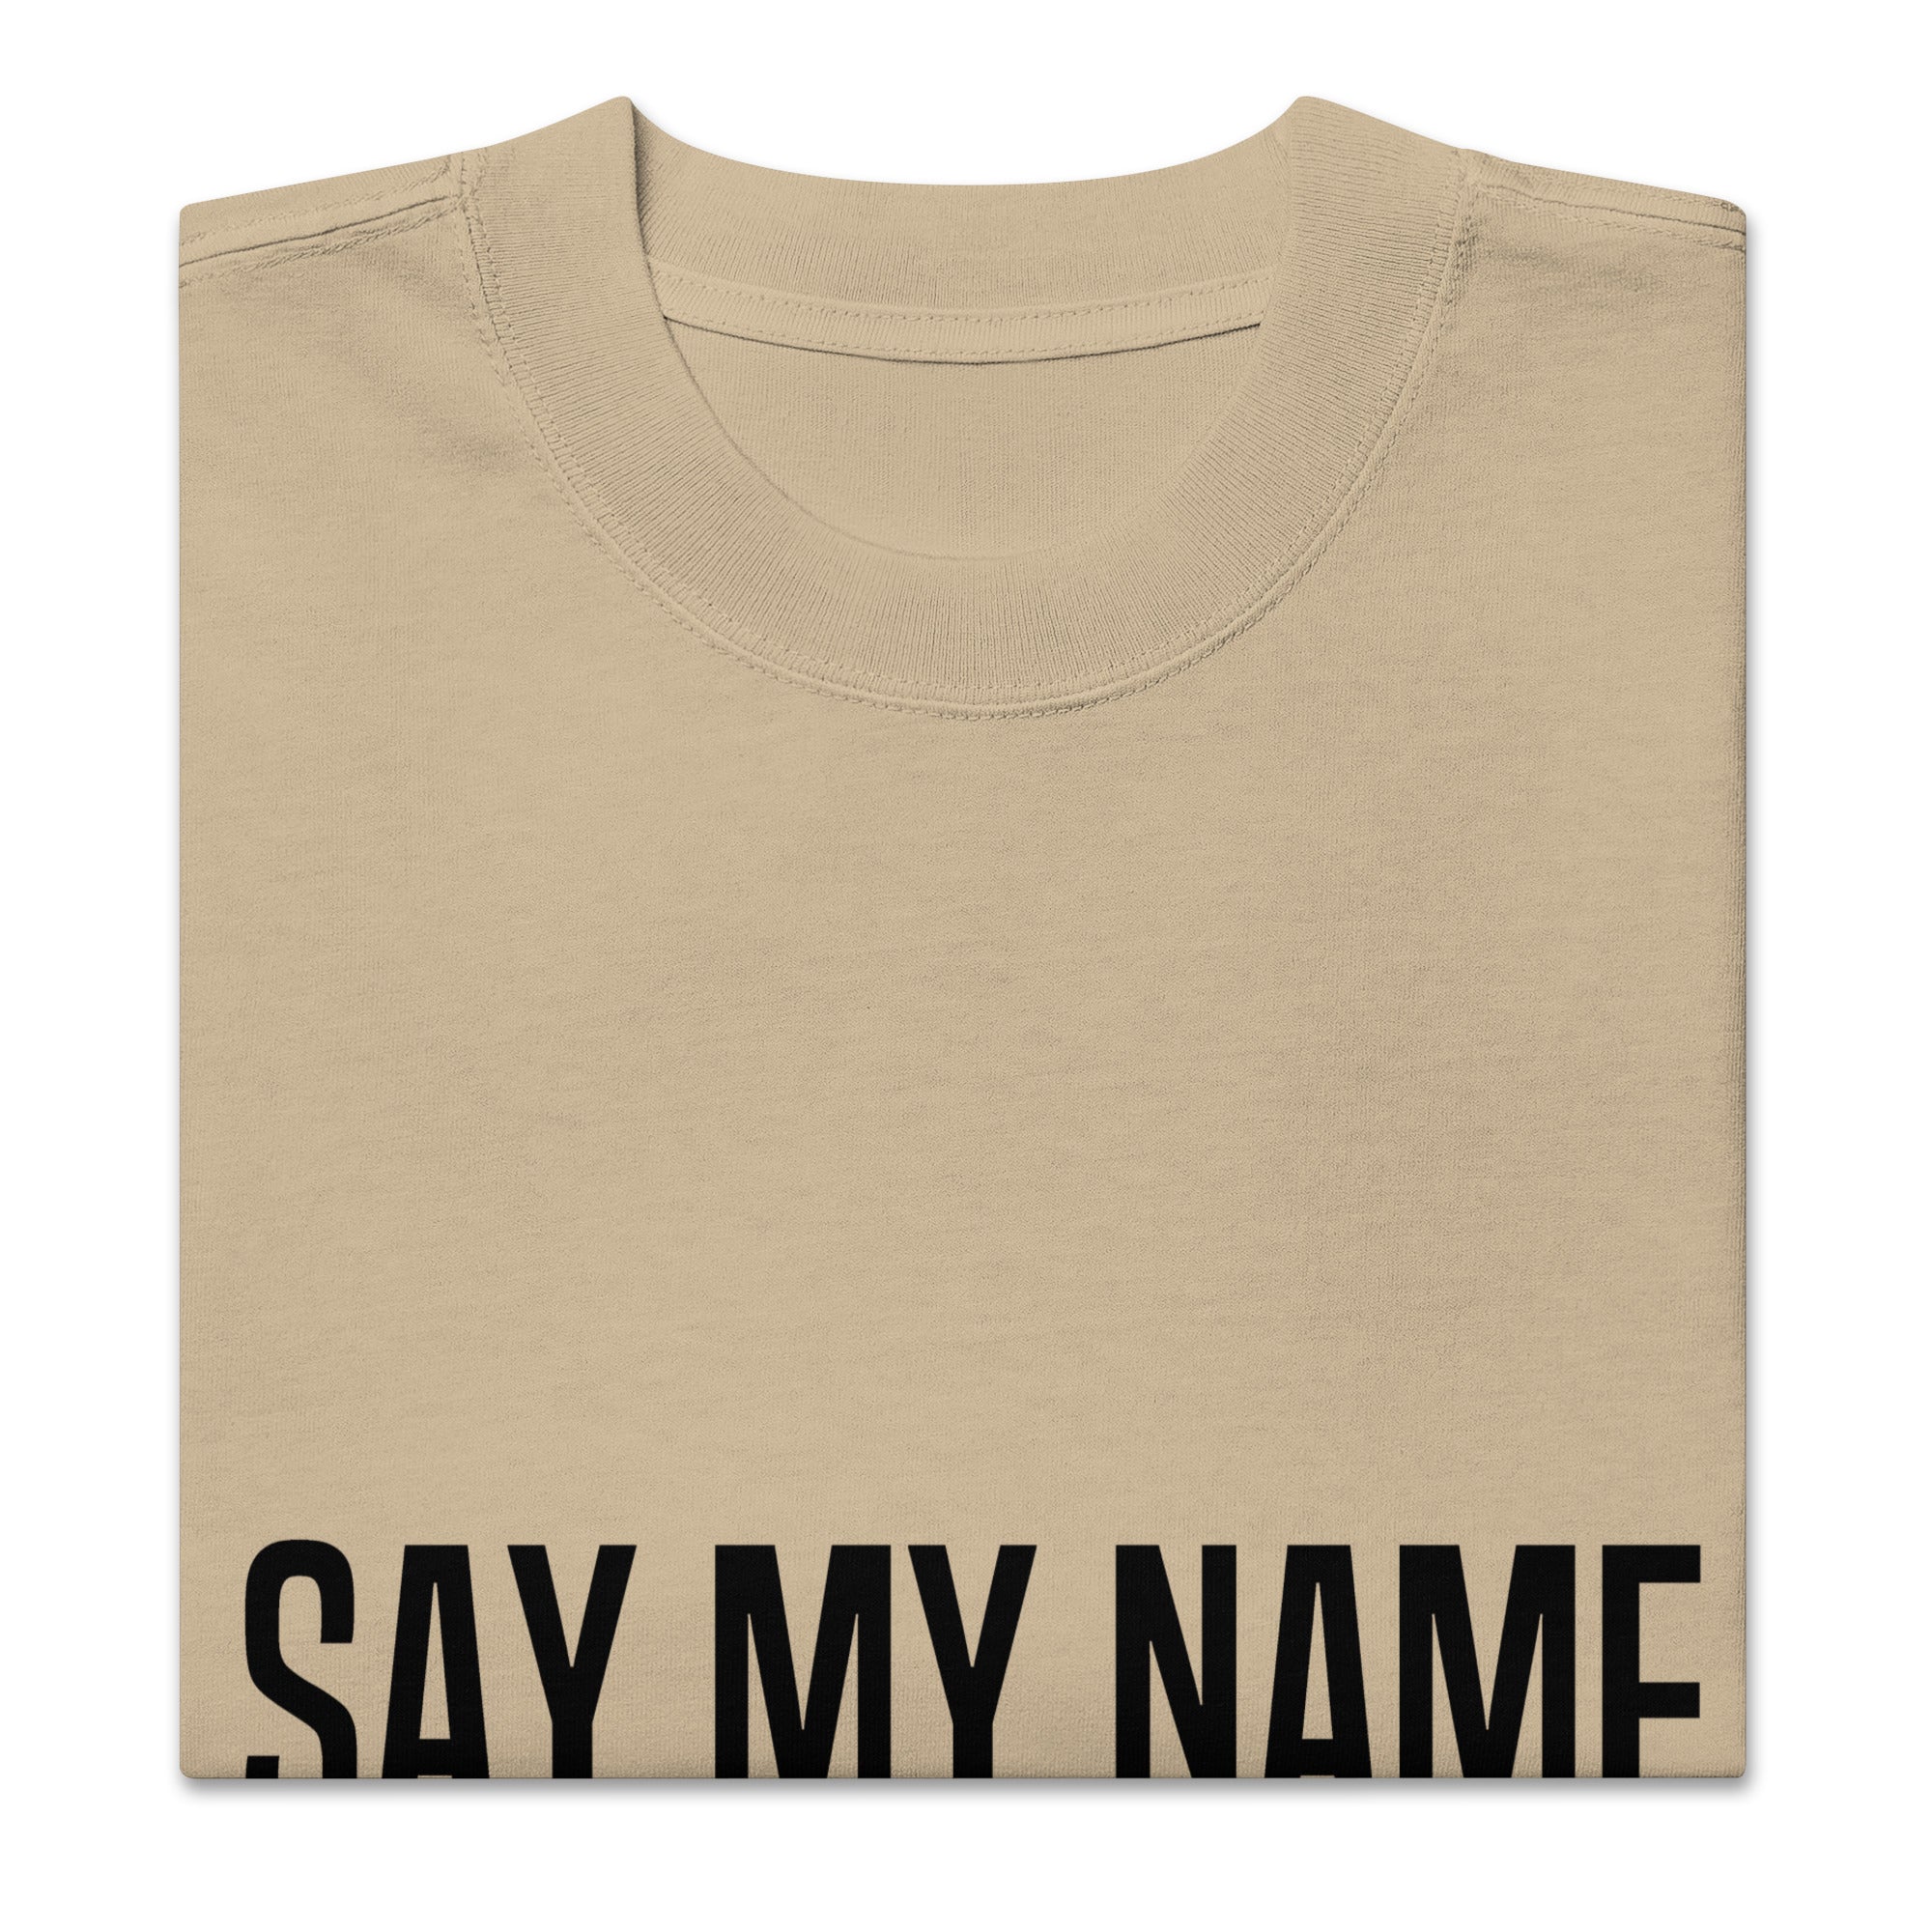 CSG oversized unisex faded “SAY MY NAME” t-shirt